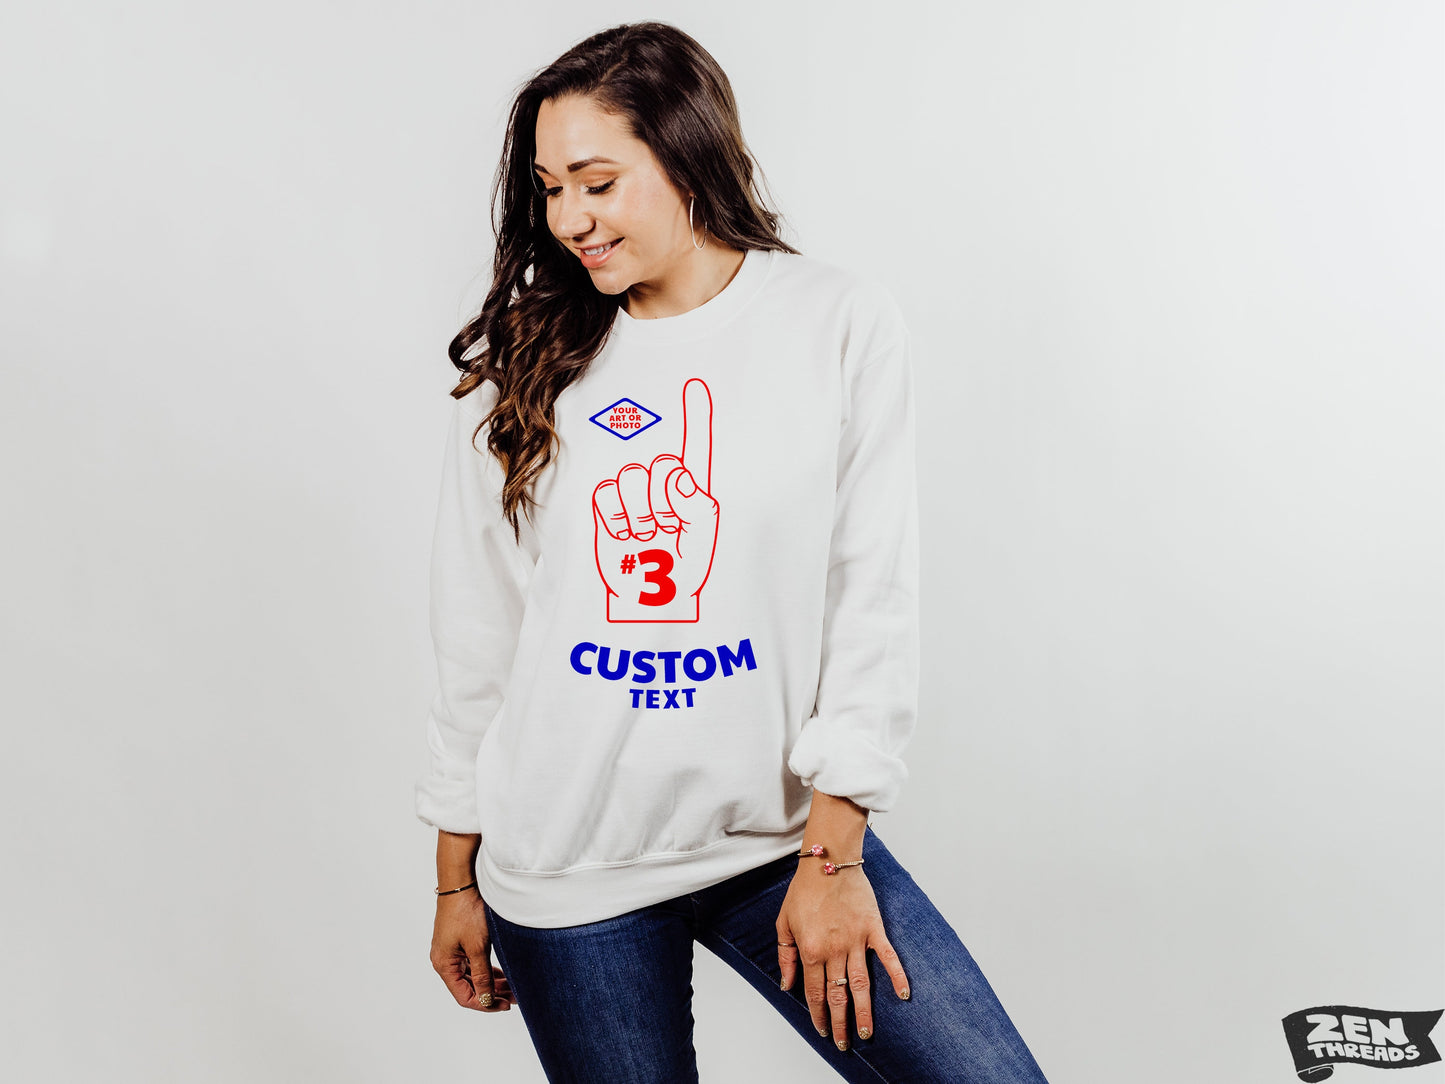 CUSTOM PRINT Your logo or Art -Unisex Sweatshirt fleece crew neck sweater classic mens women's personalized customized mascot photo design